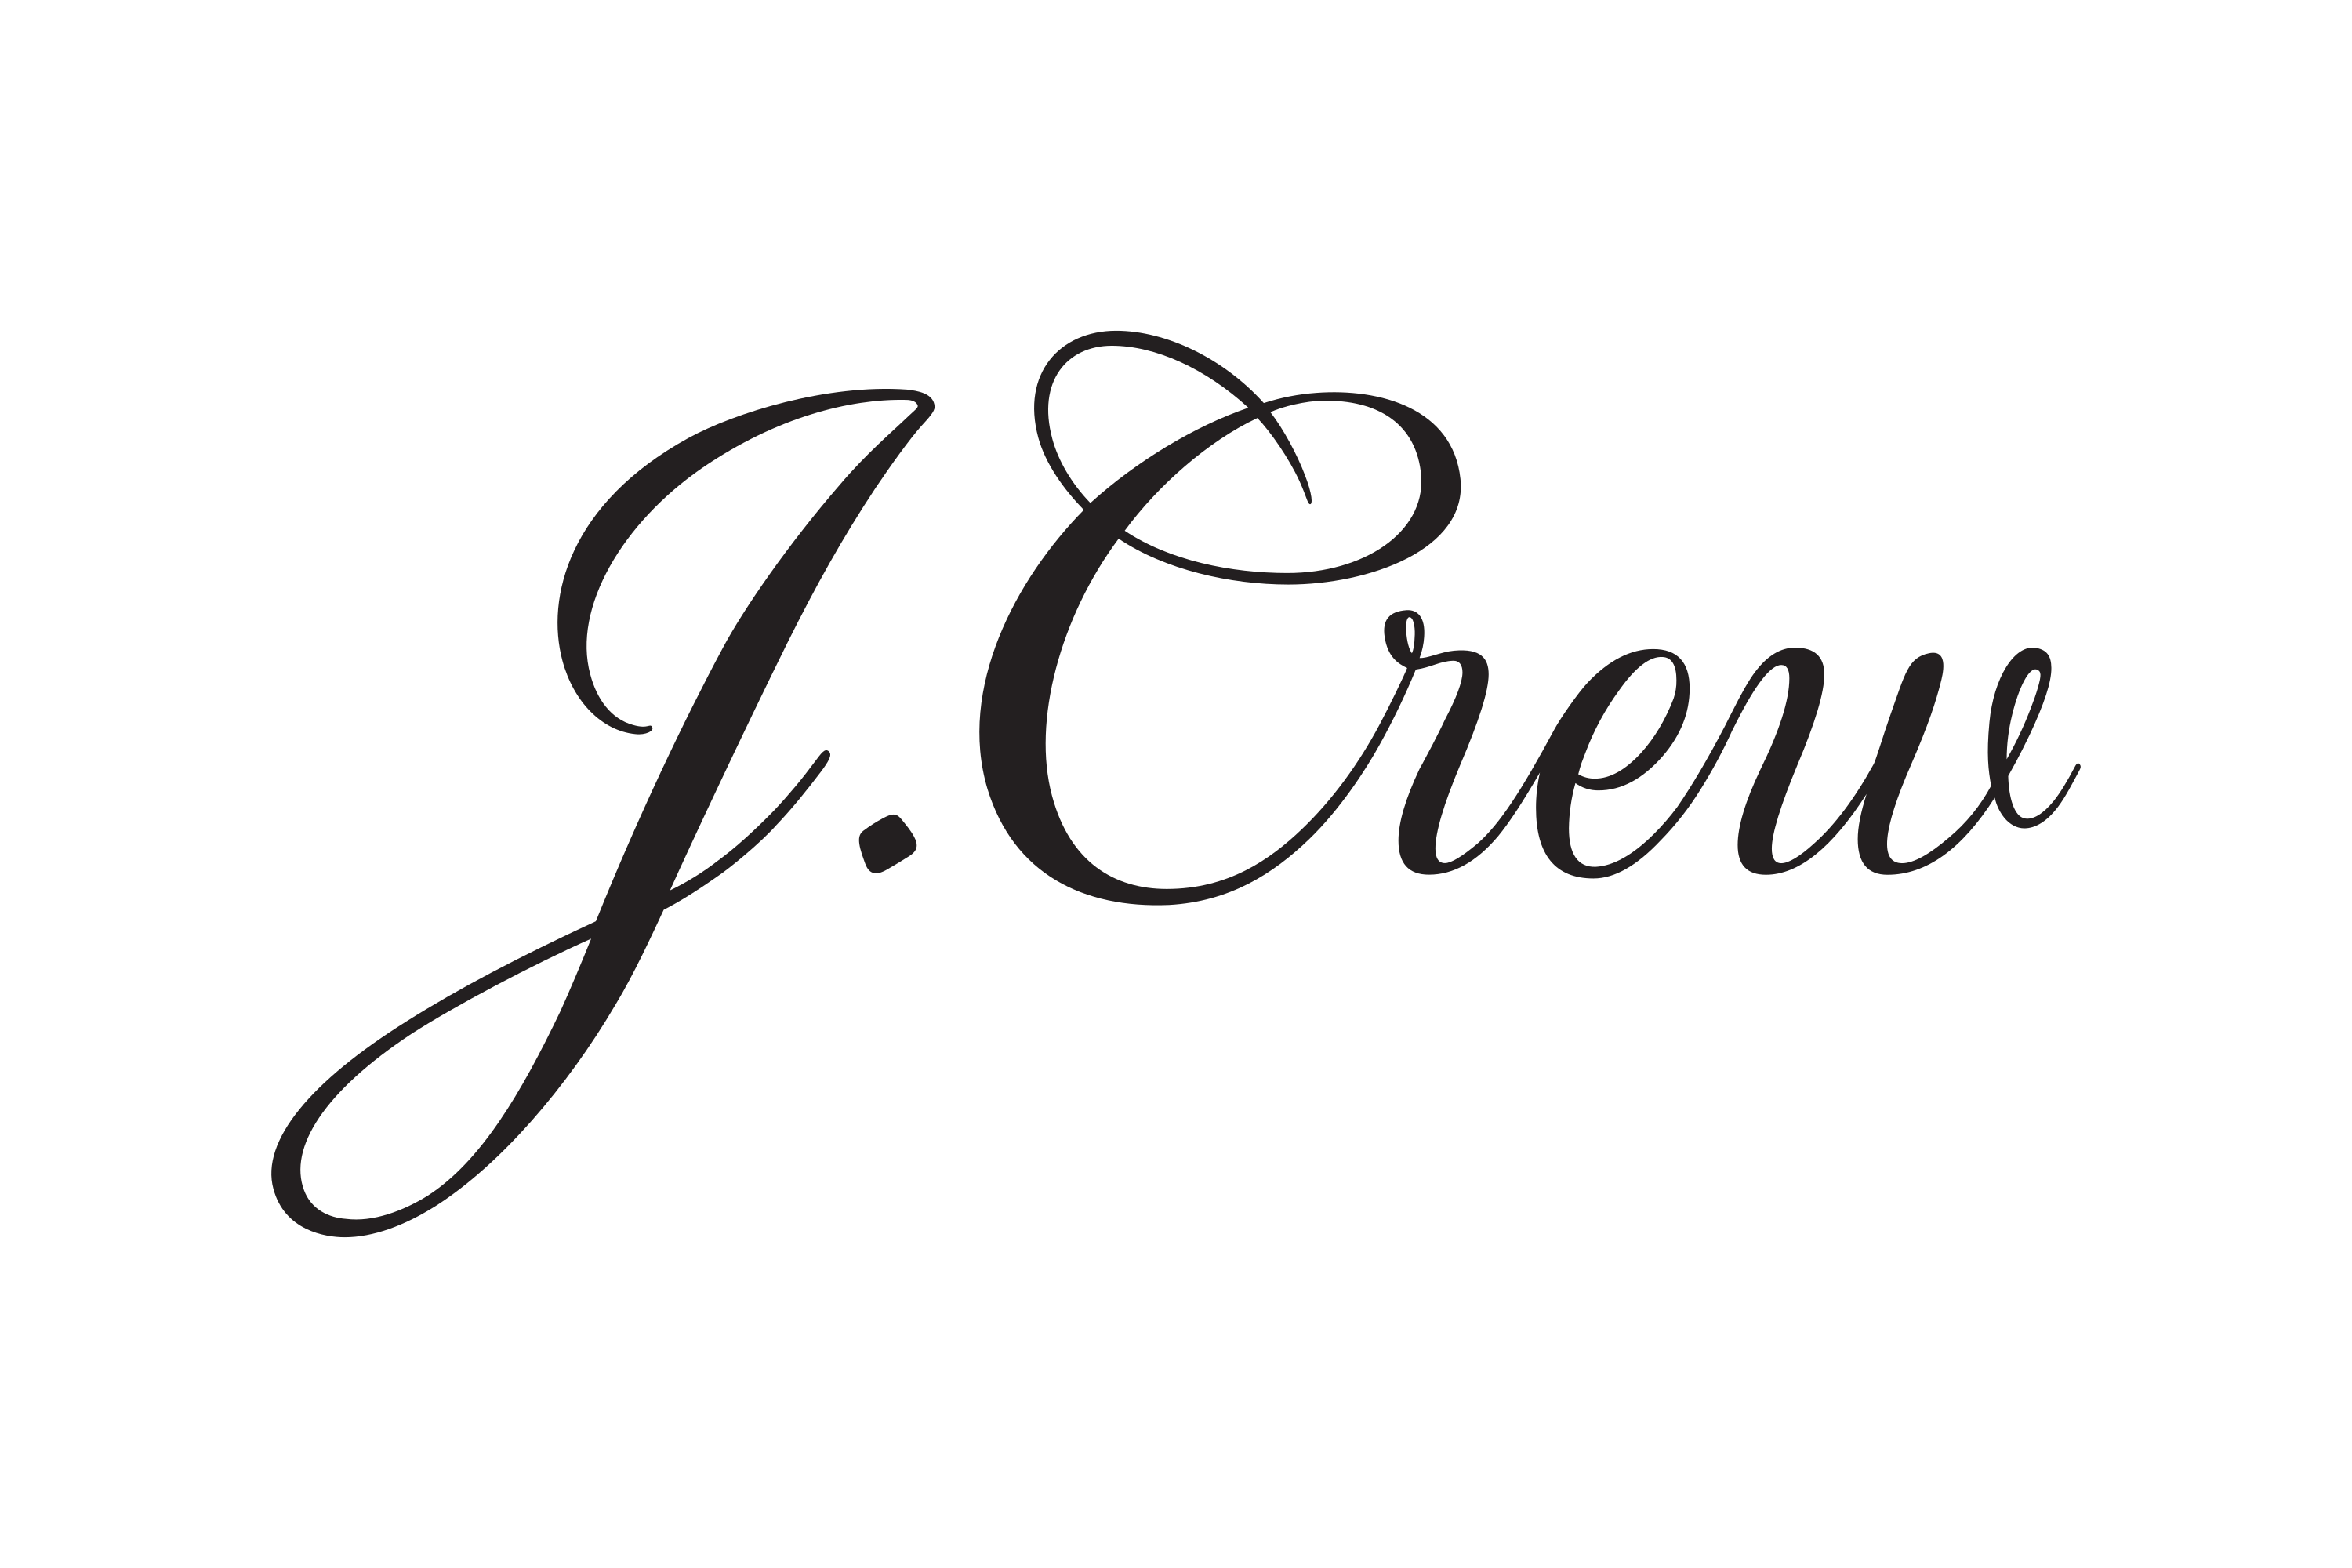 Jcrew. Crew лого. Логотип jcrew. J.Crew логотип. Шрифт WRG Crew.